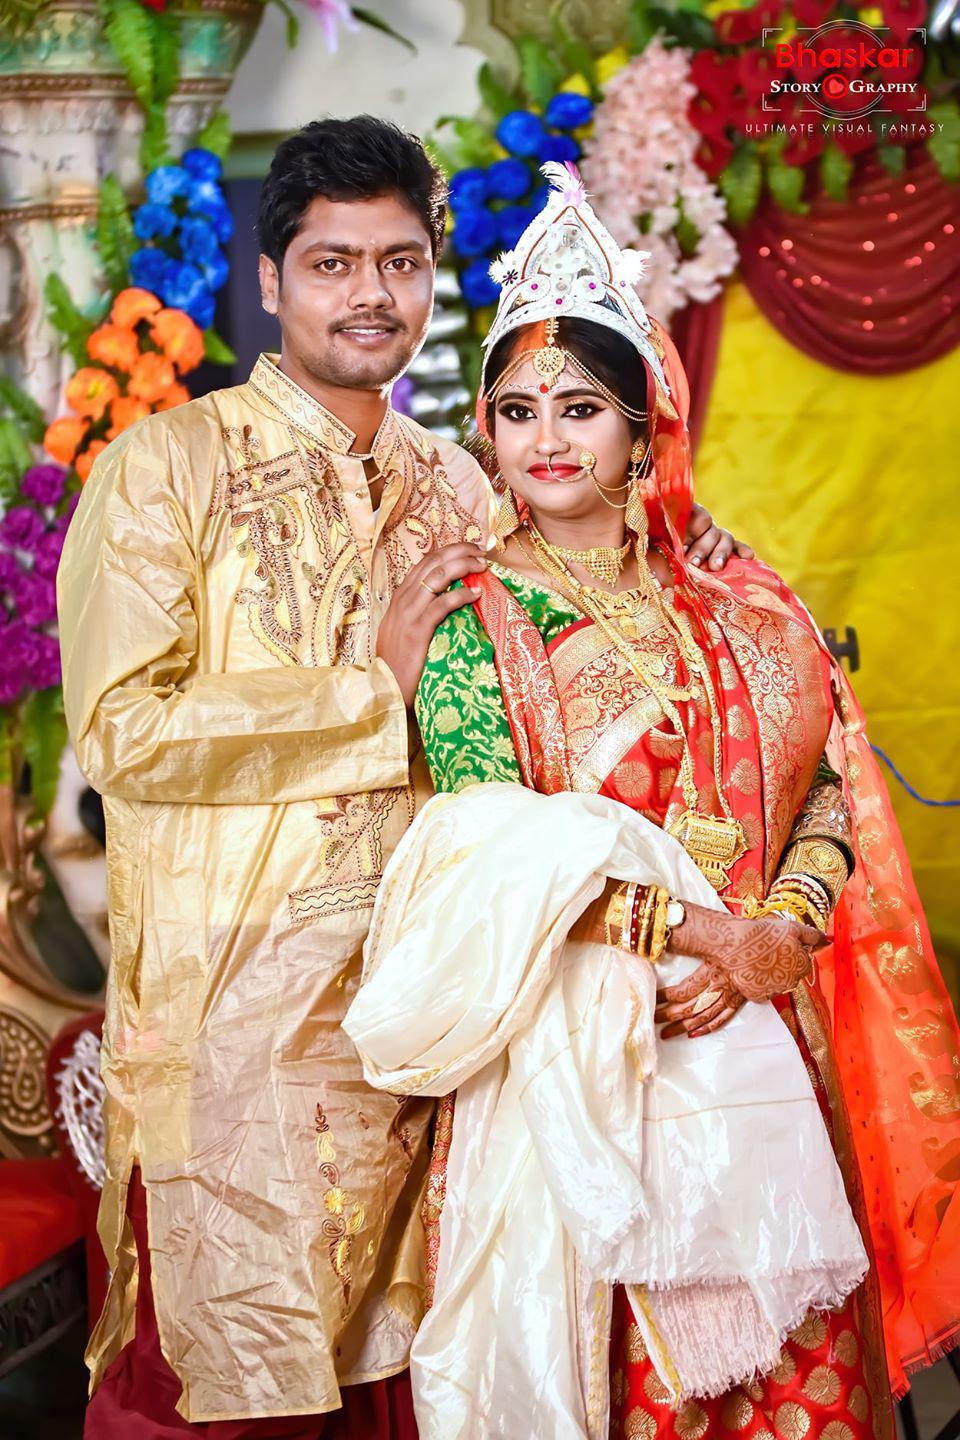 Bhaskar Story O Graphy Wedding Photographer, Kolkata